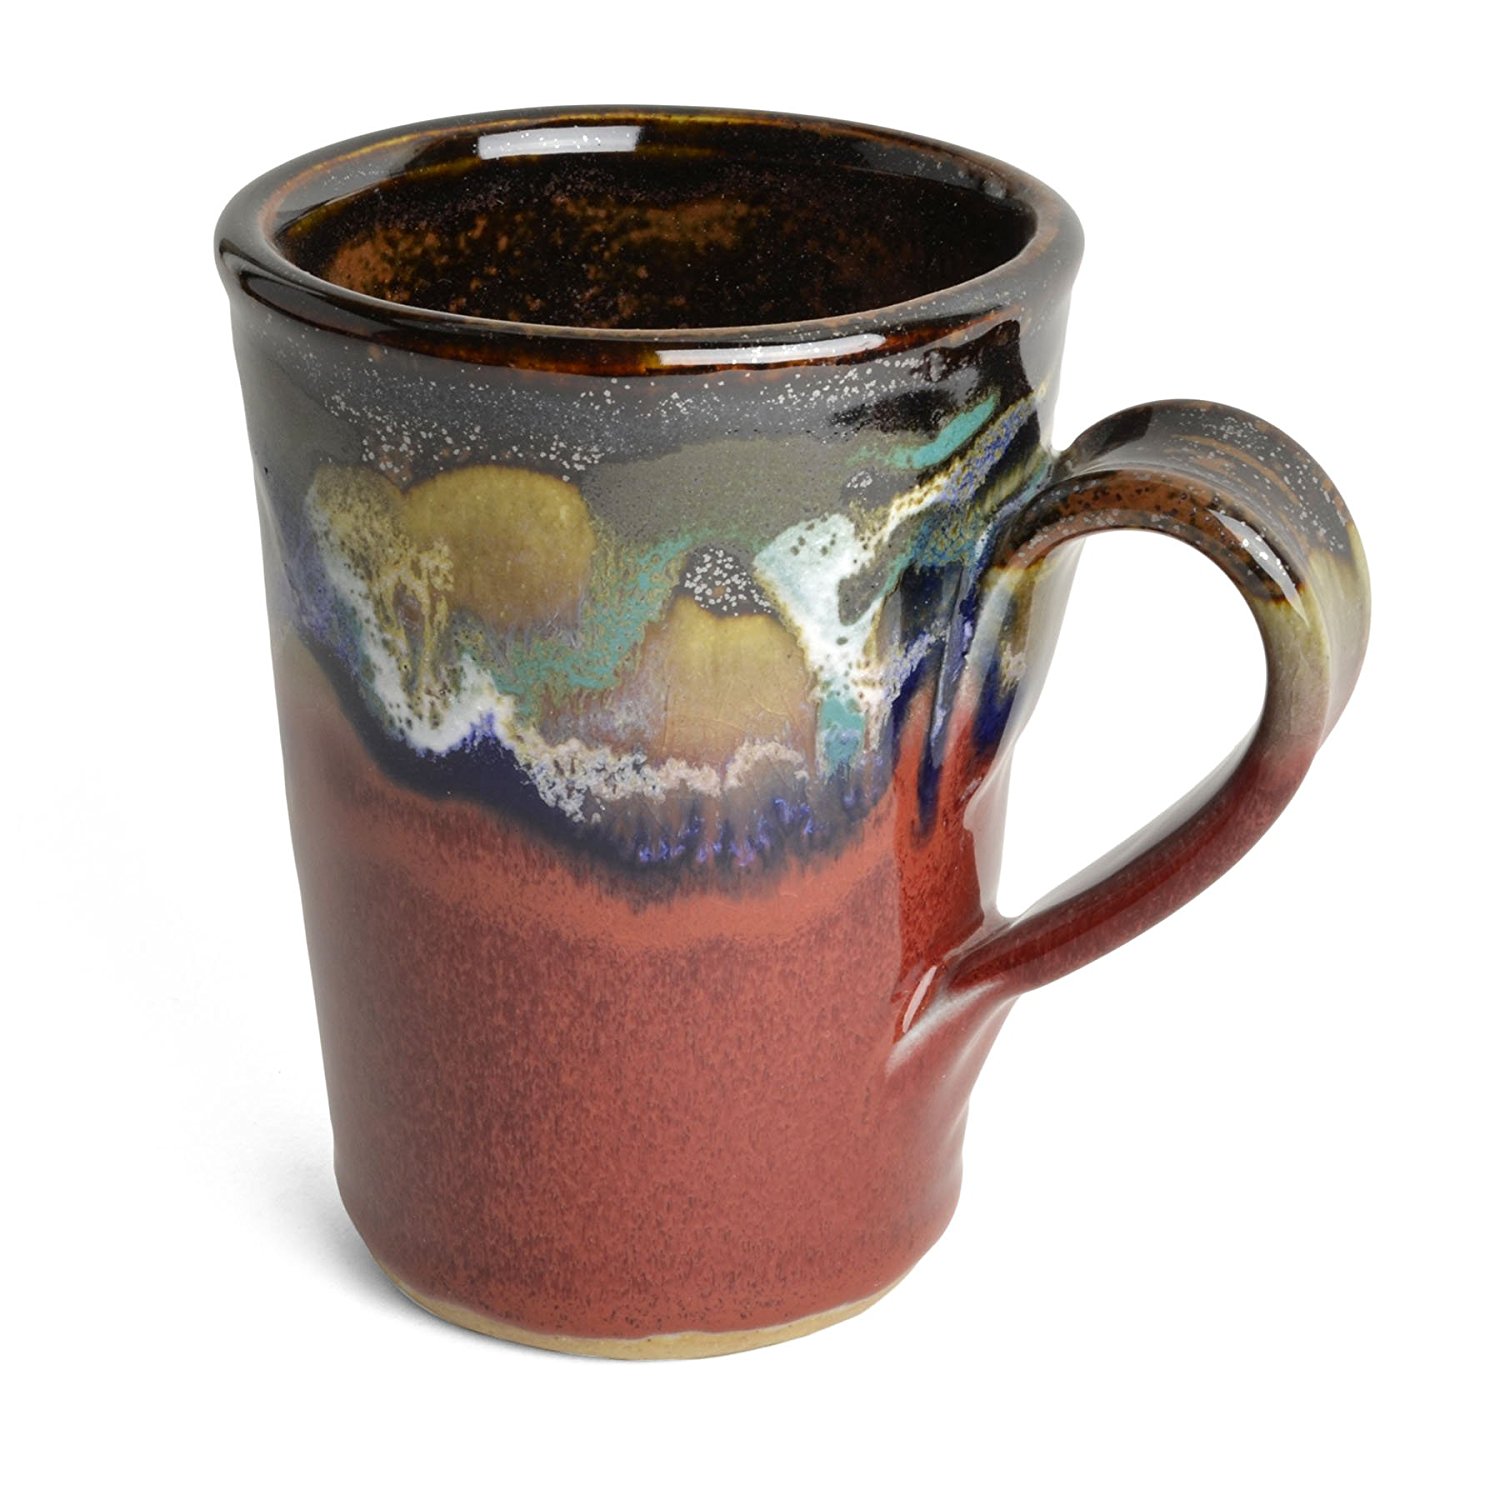 Amazon.com: Larrabee Ceramics Coffee Mug, Brown/Multi: Kitchen & Dining